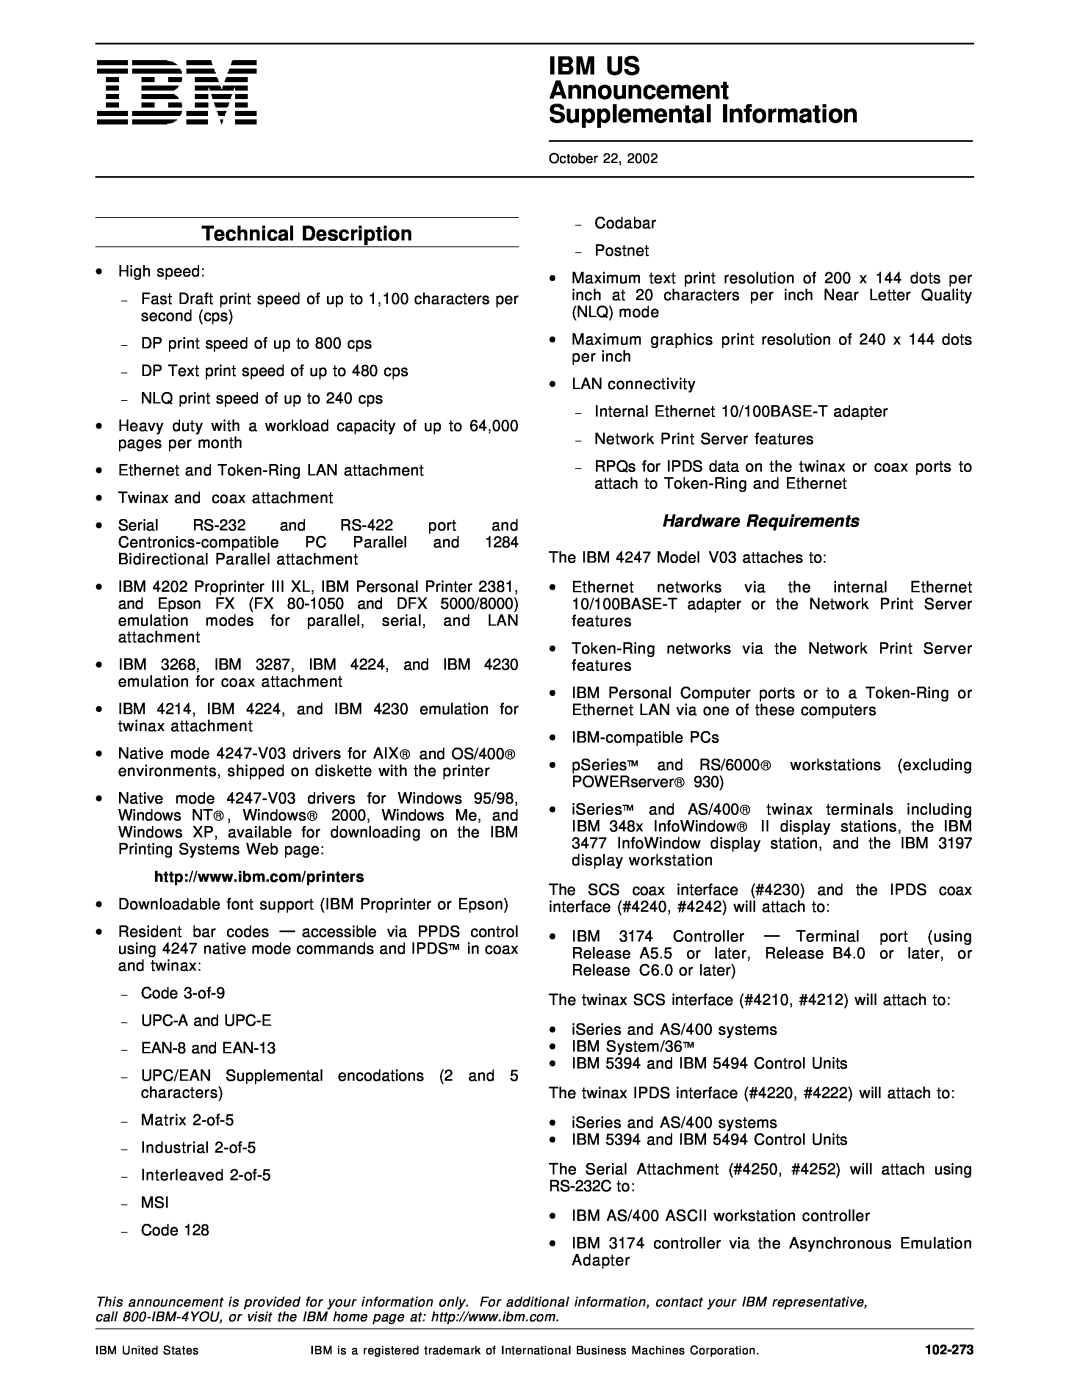 IBM V03 manual Technical Description, IBM US Announcement Supplemental Information 